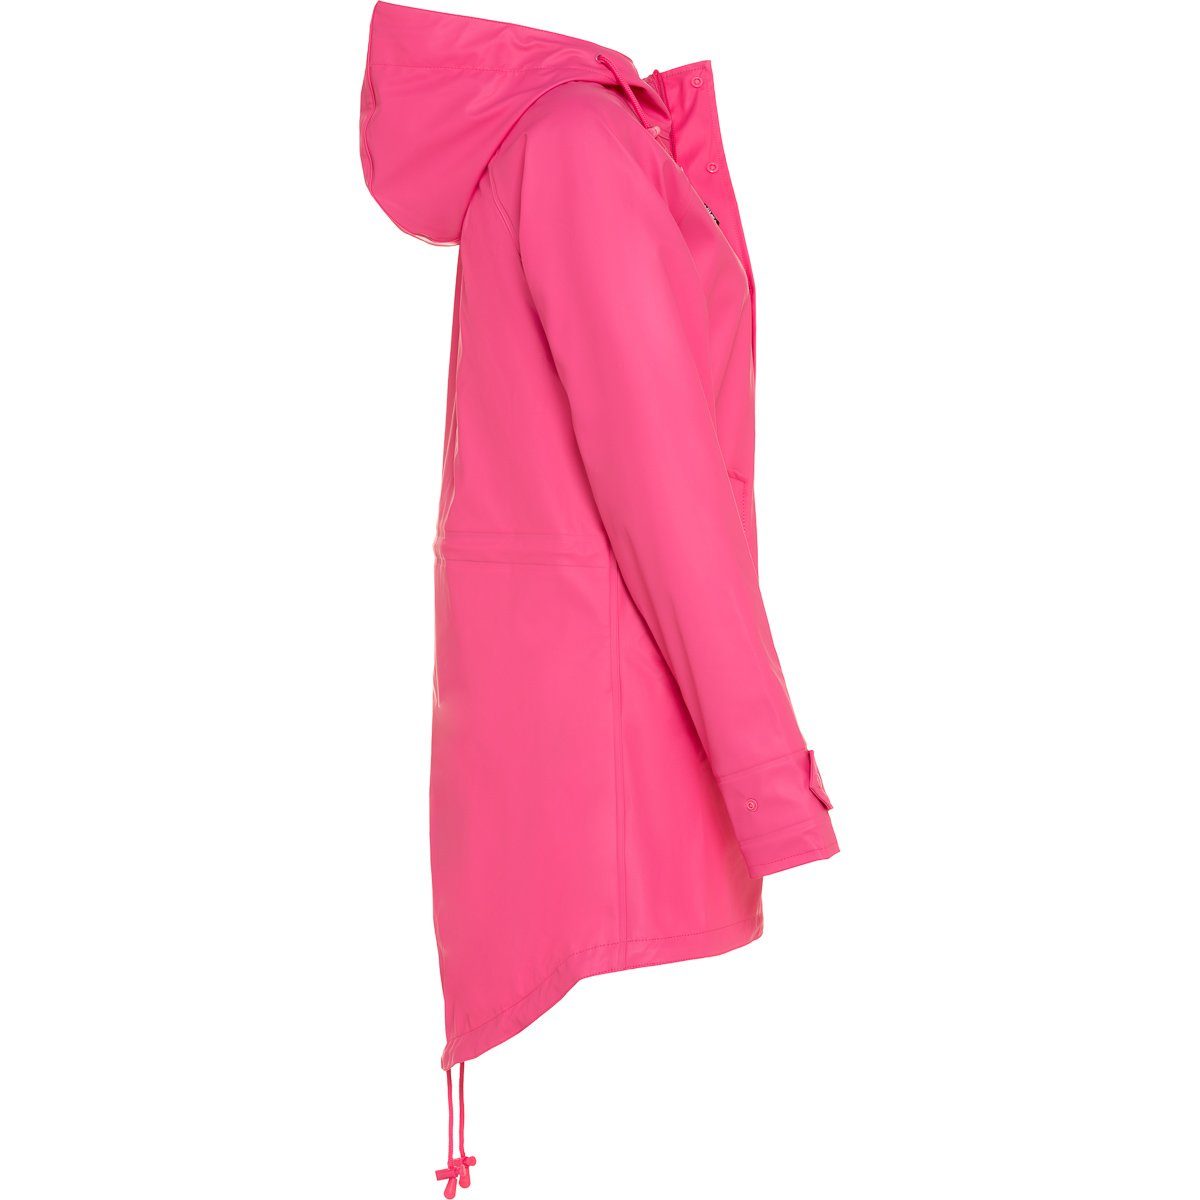 Regenmantel Coat SoftSkin BMS 100% << wasserdicht >> pink HafenCity